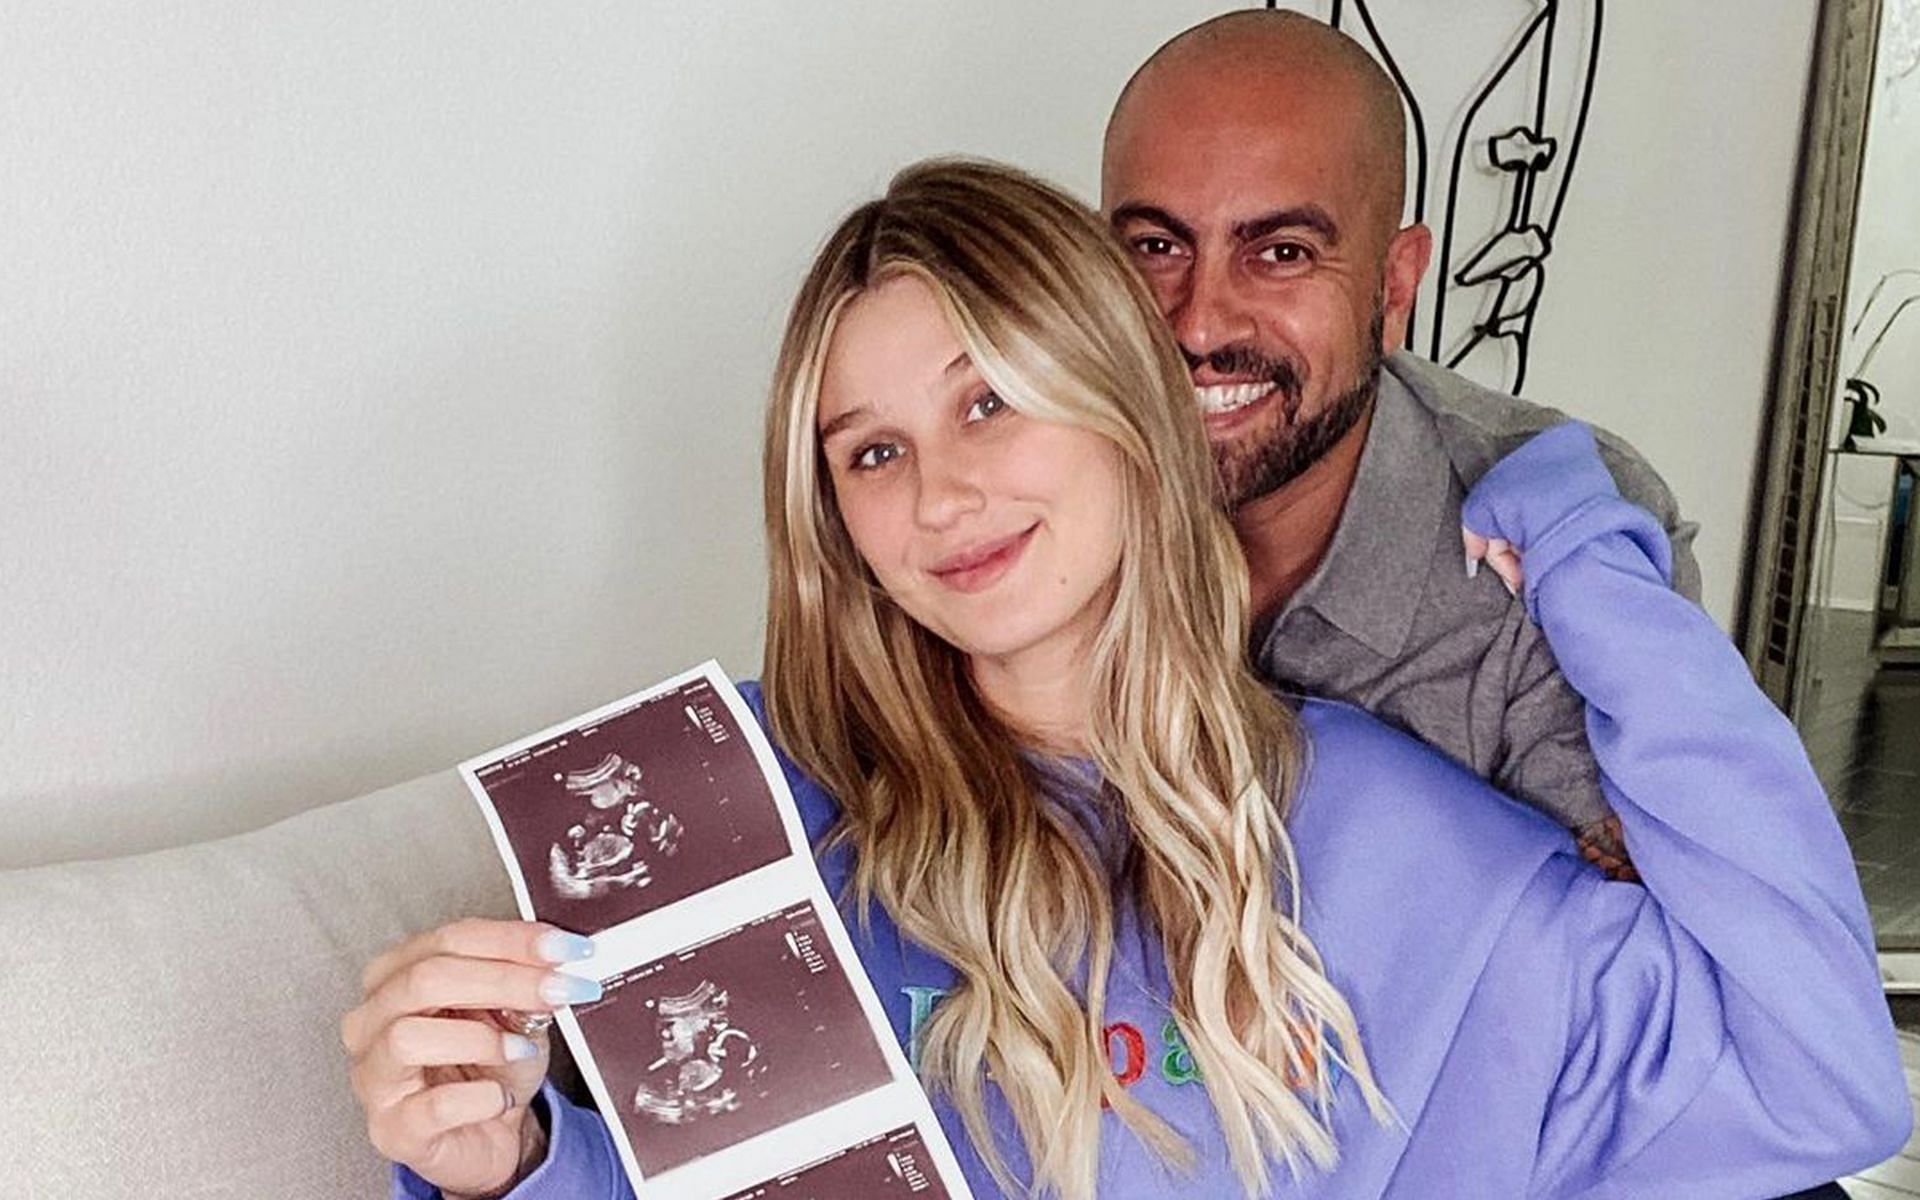 Siesta Key star Madisson Hausburg gave birth to stillborn baby in December (Image via ishsoto1/Instagram)